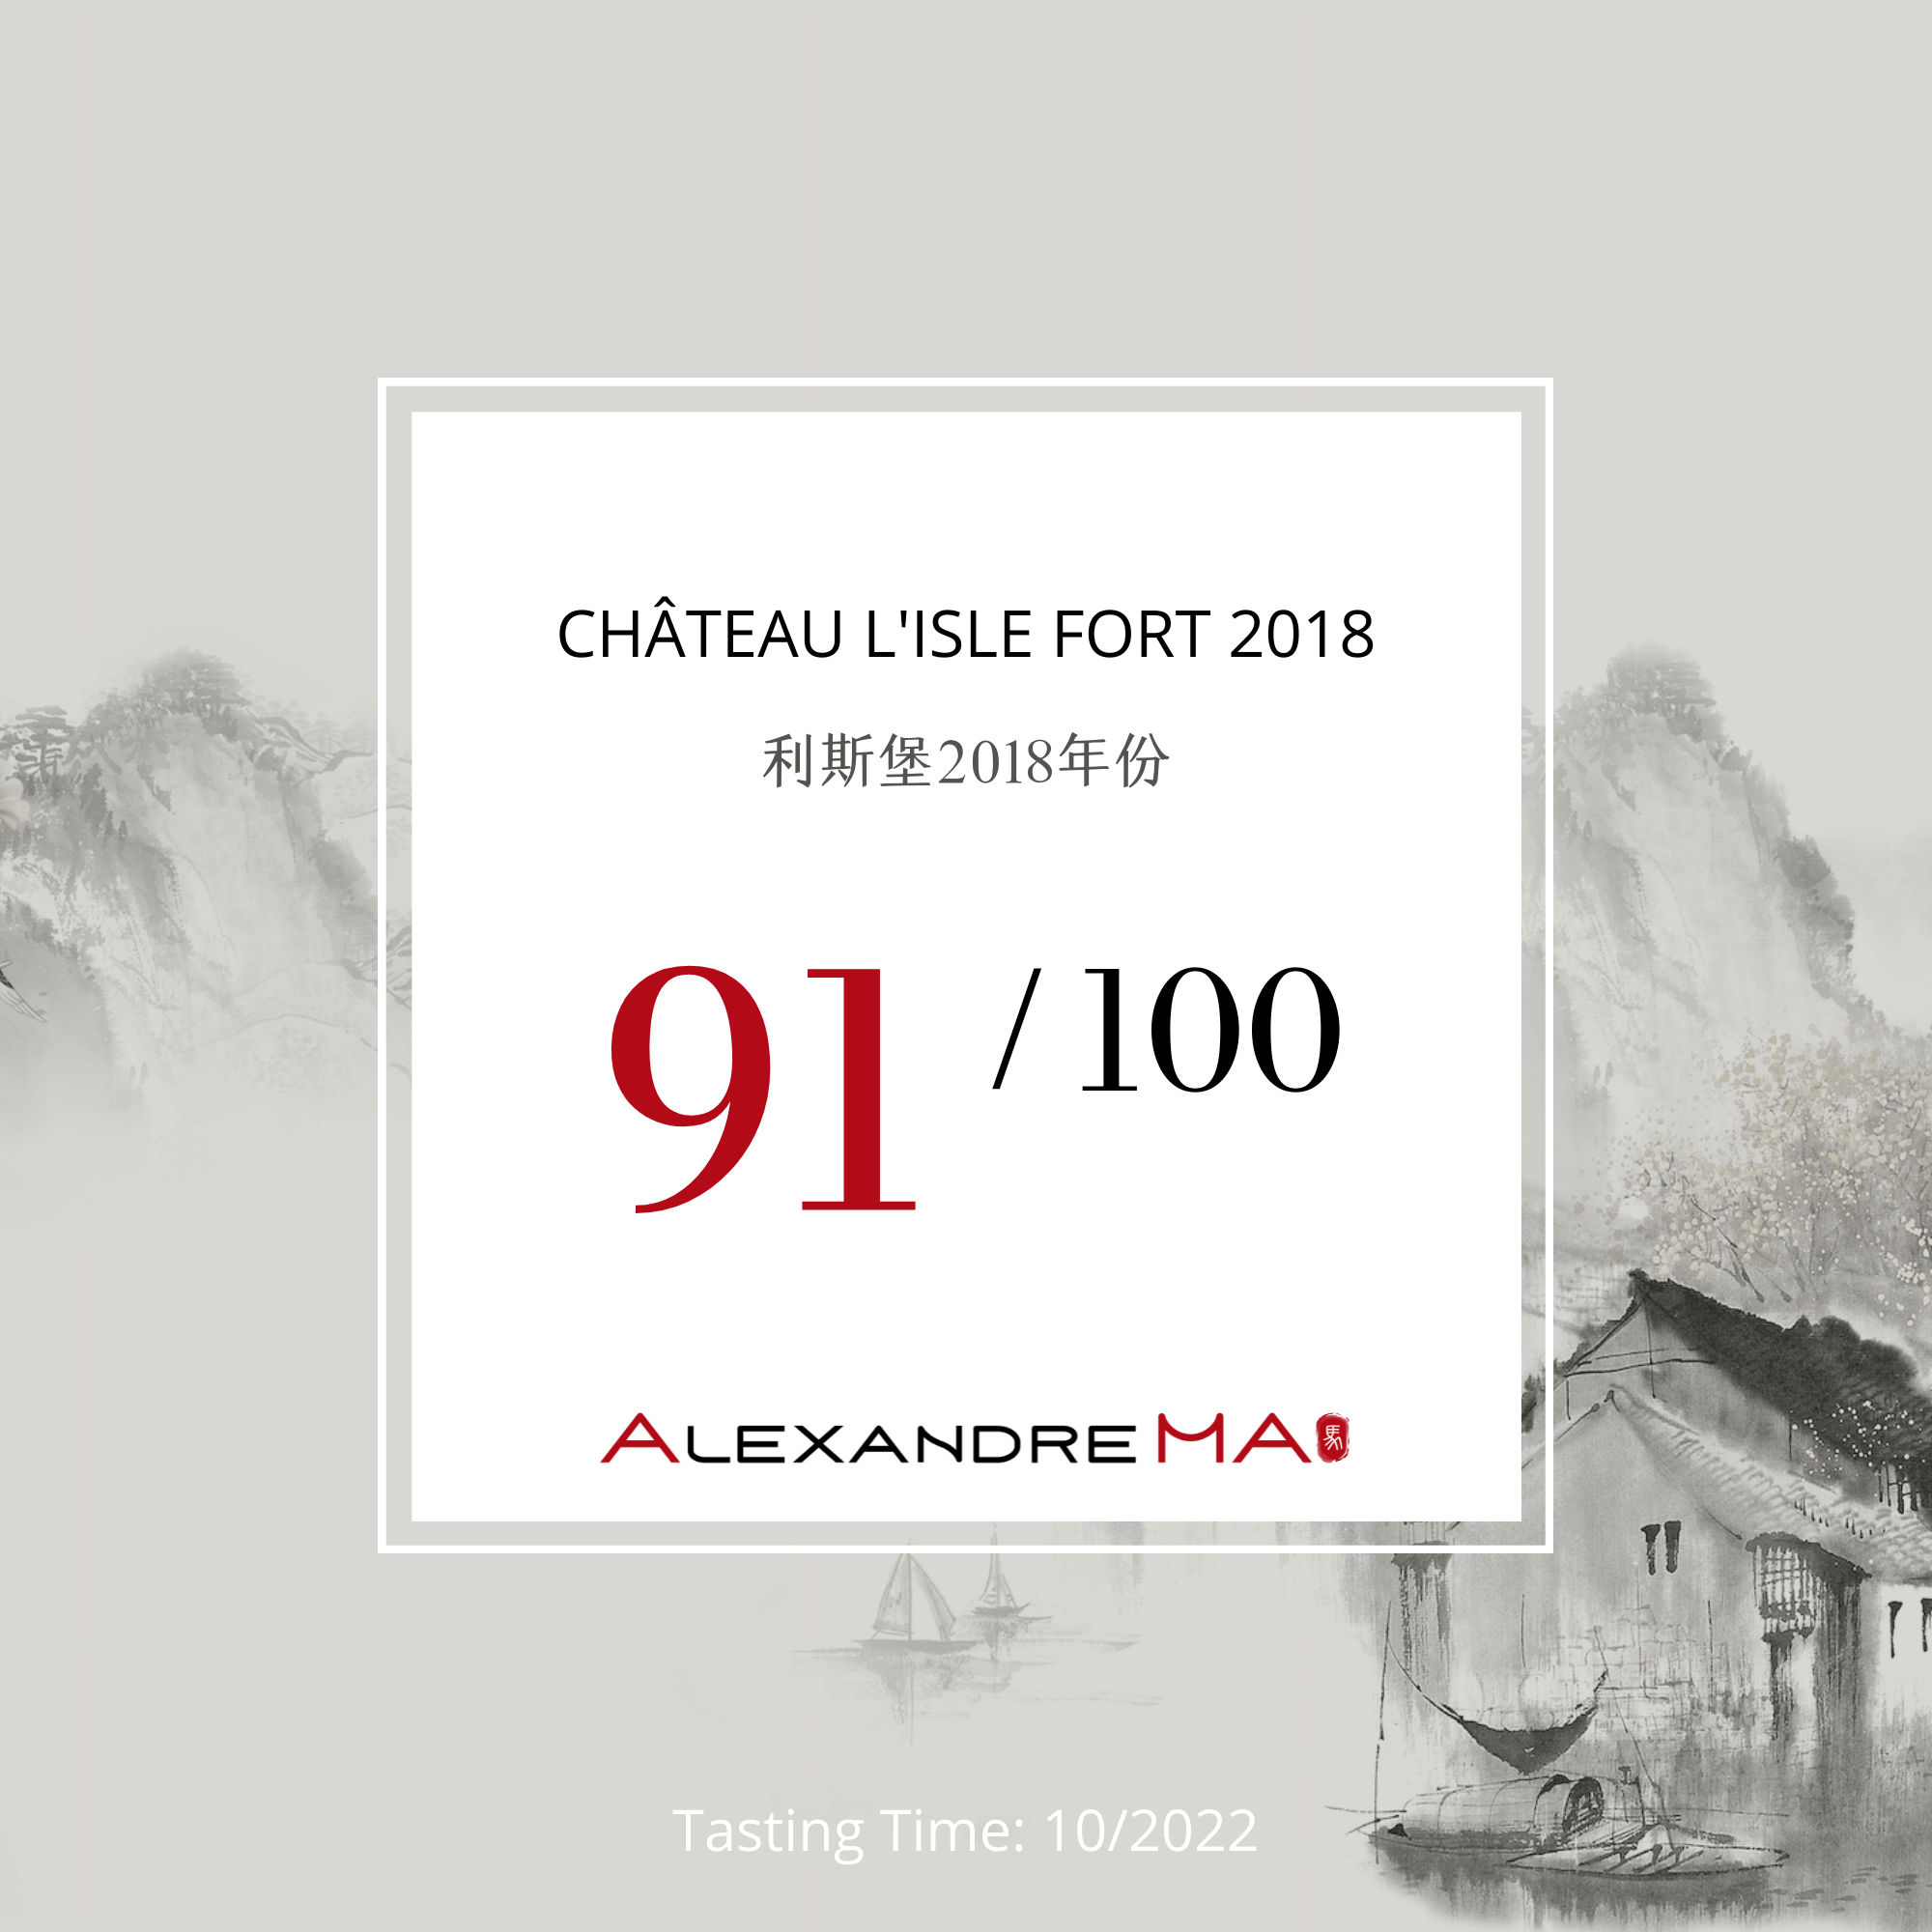 Château l’Isle Fort 2018 - Alexandre MA